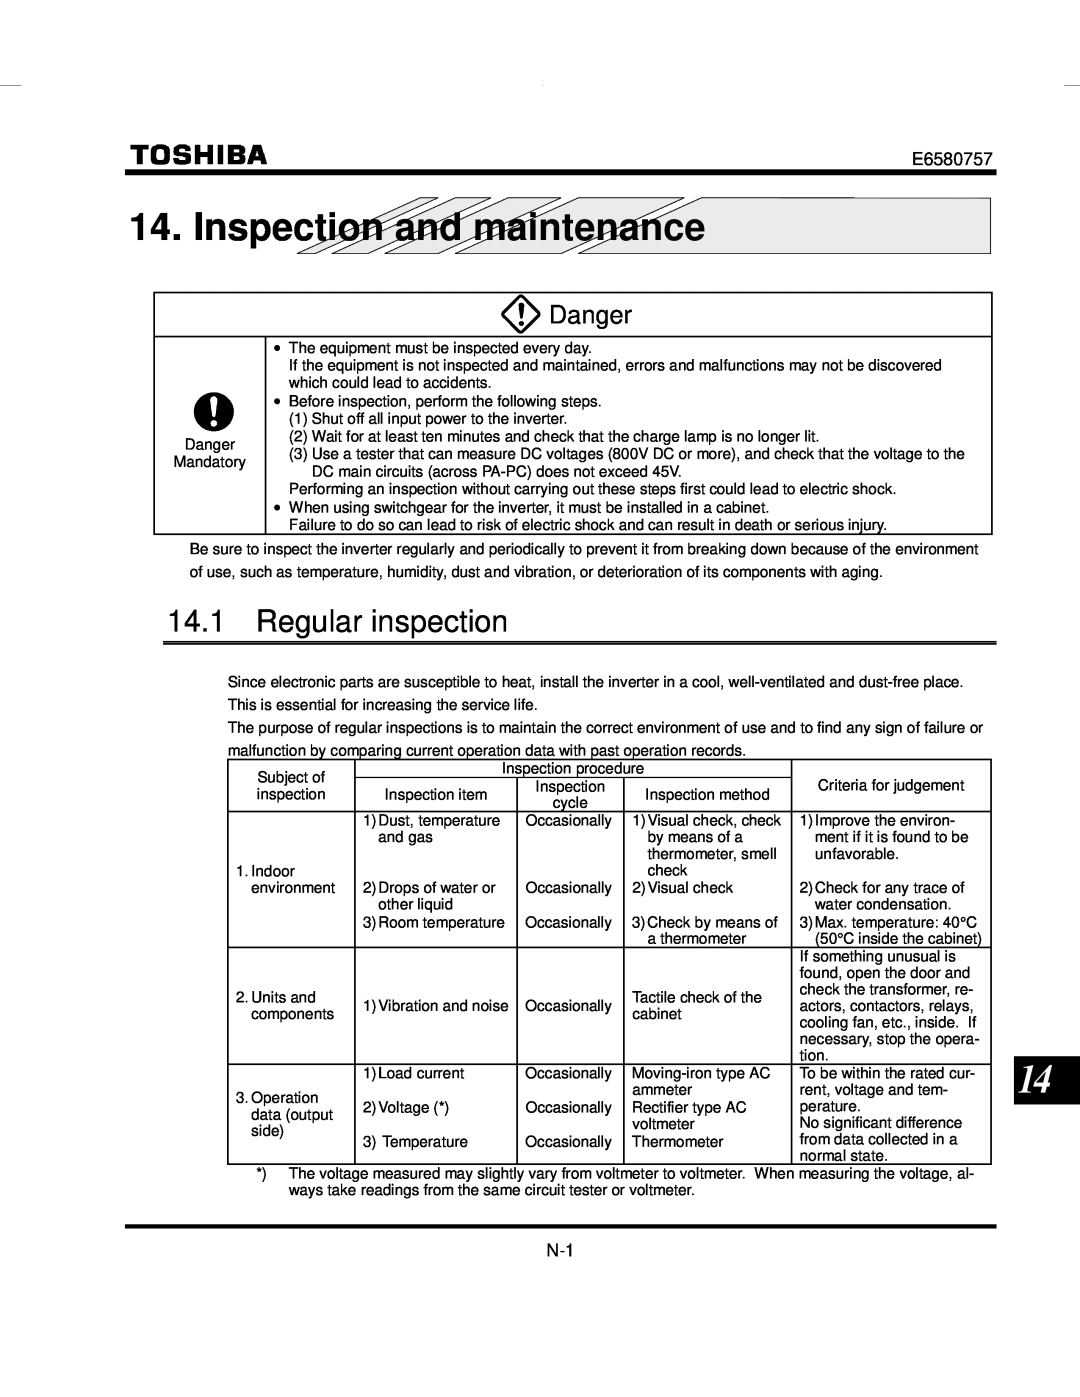 Toshiba VF-S9 manual Inspection and maintenance, Regular inspection, Danger 